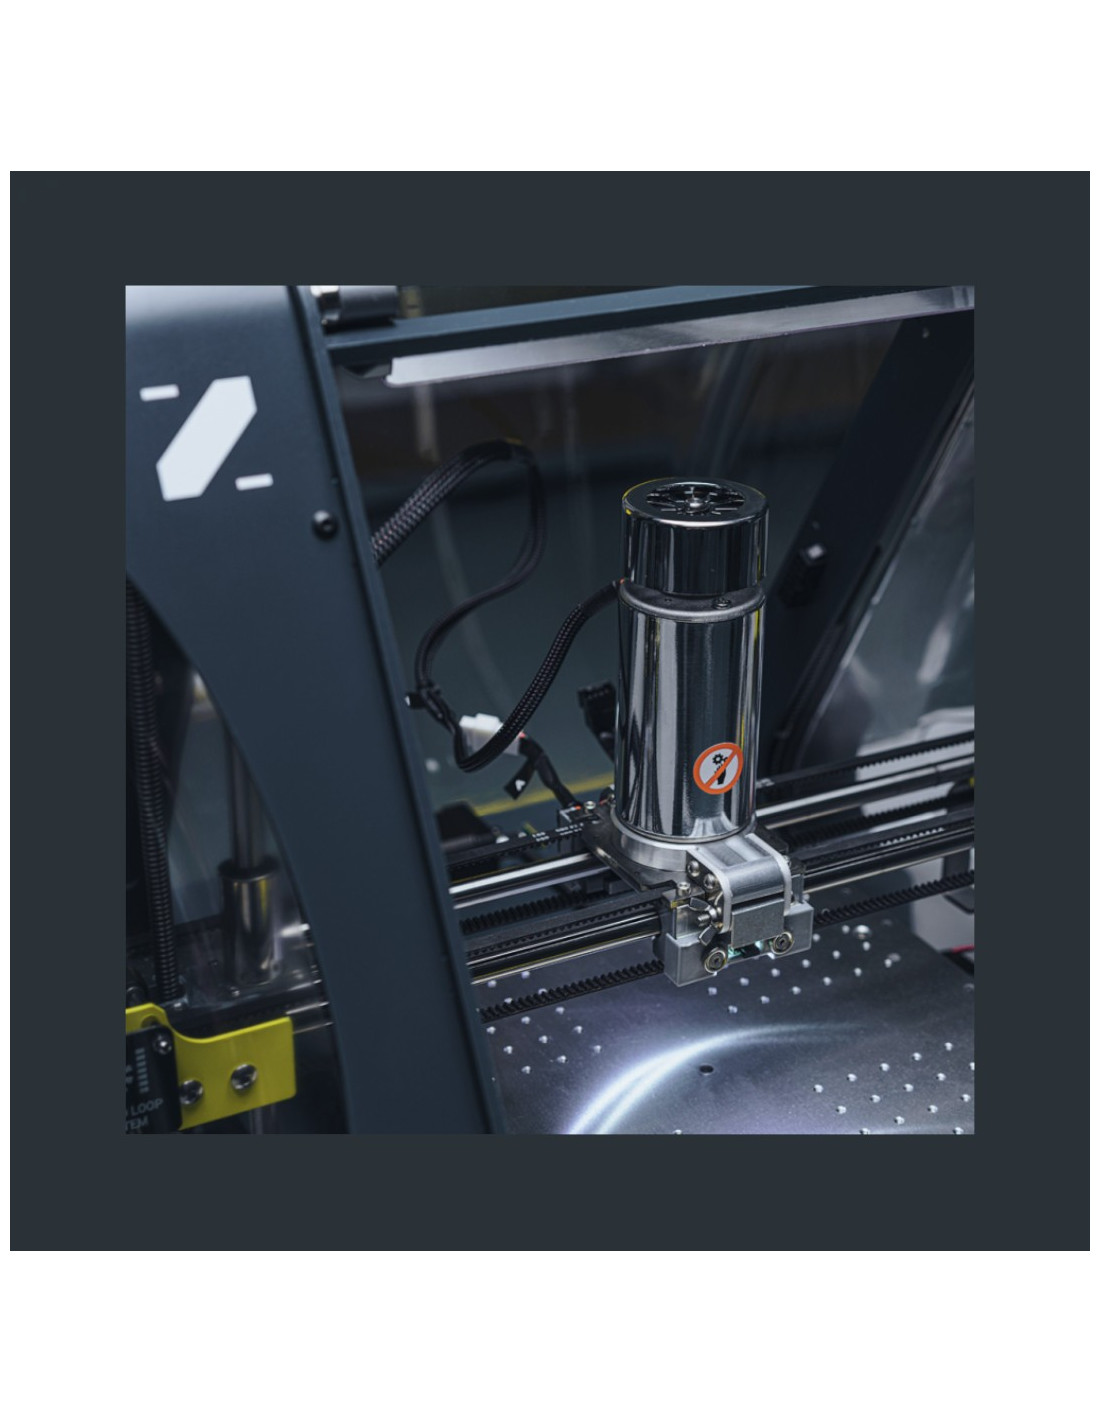 Multi-ferramenta - Impressora 3D multifuncional ZMorph FAB